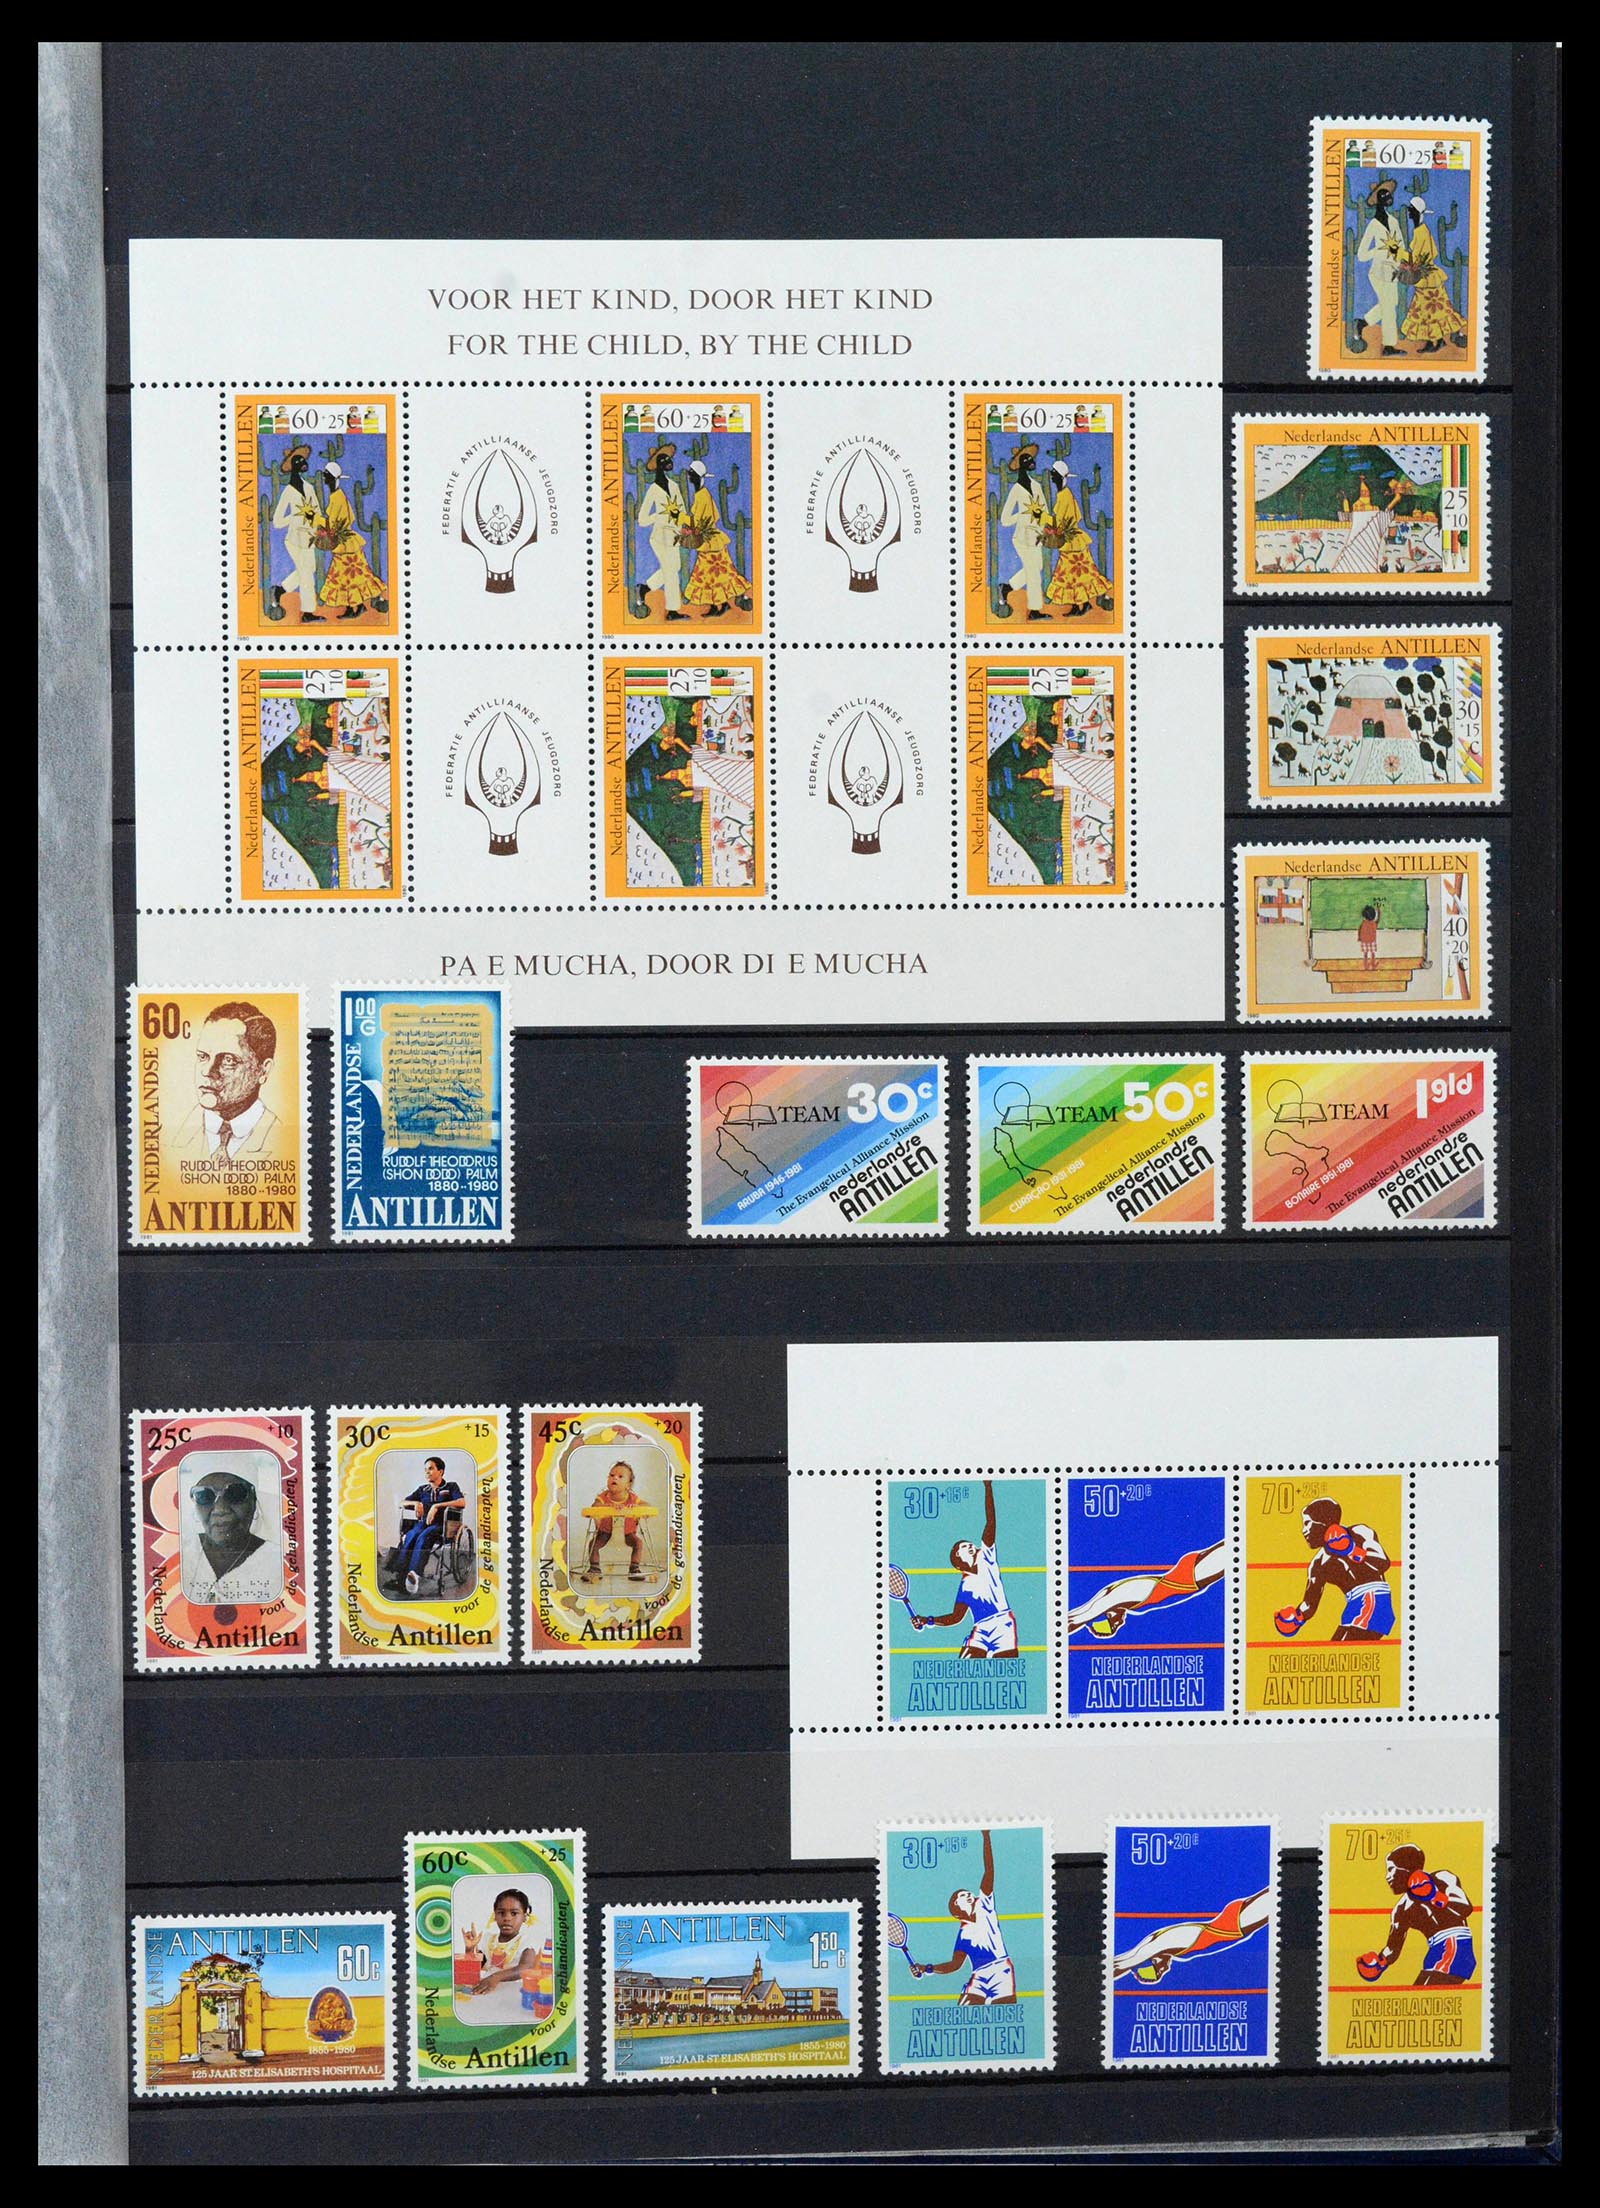 39027 0034 - Stamp collection 39027 Curaçao/Antilles/Aruba 1873-2009.